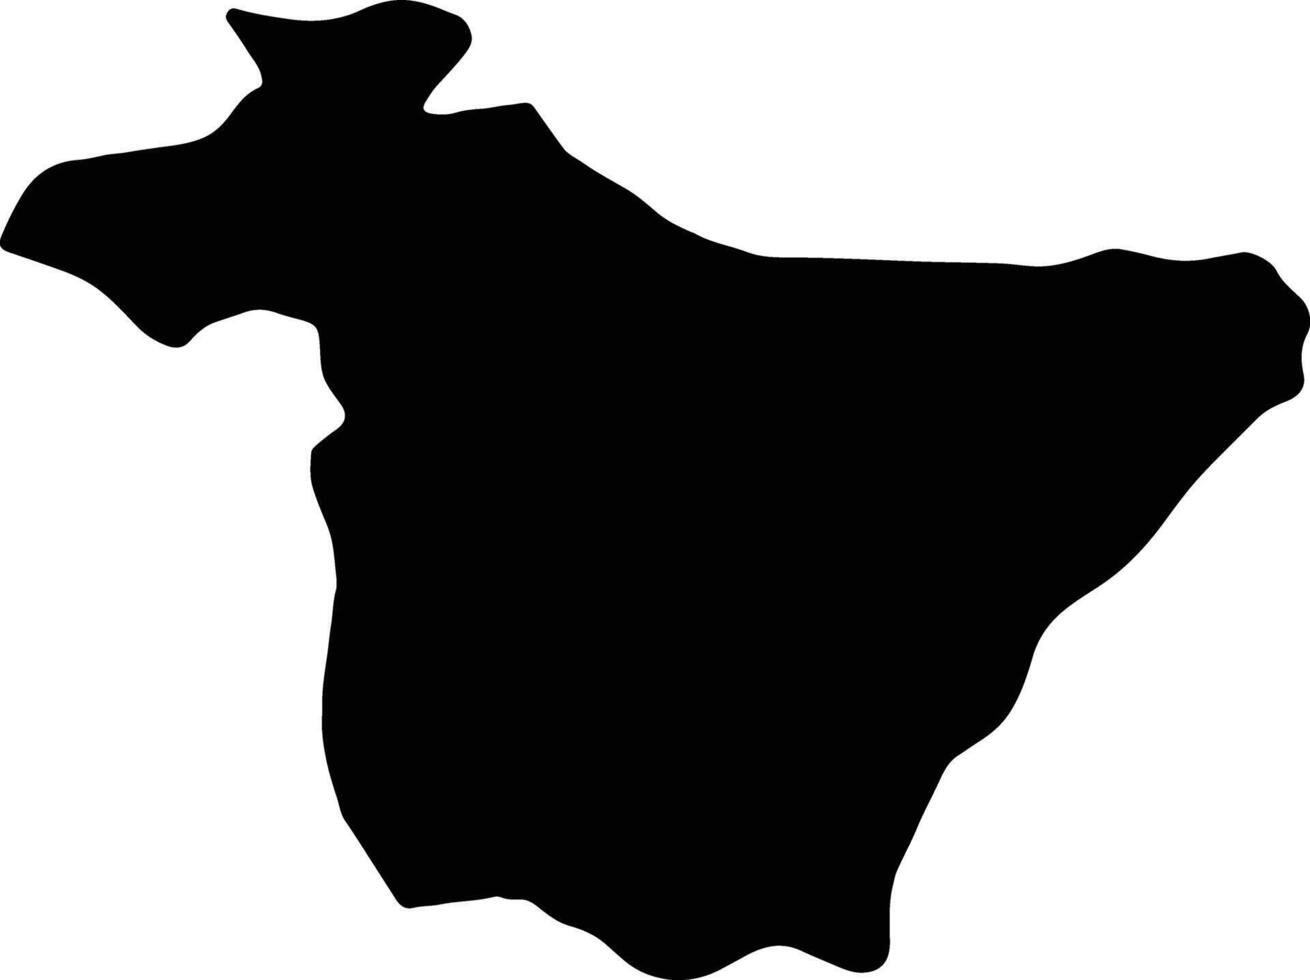 Bouira Algeria silhouette map vector